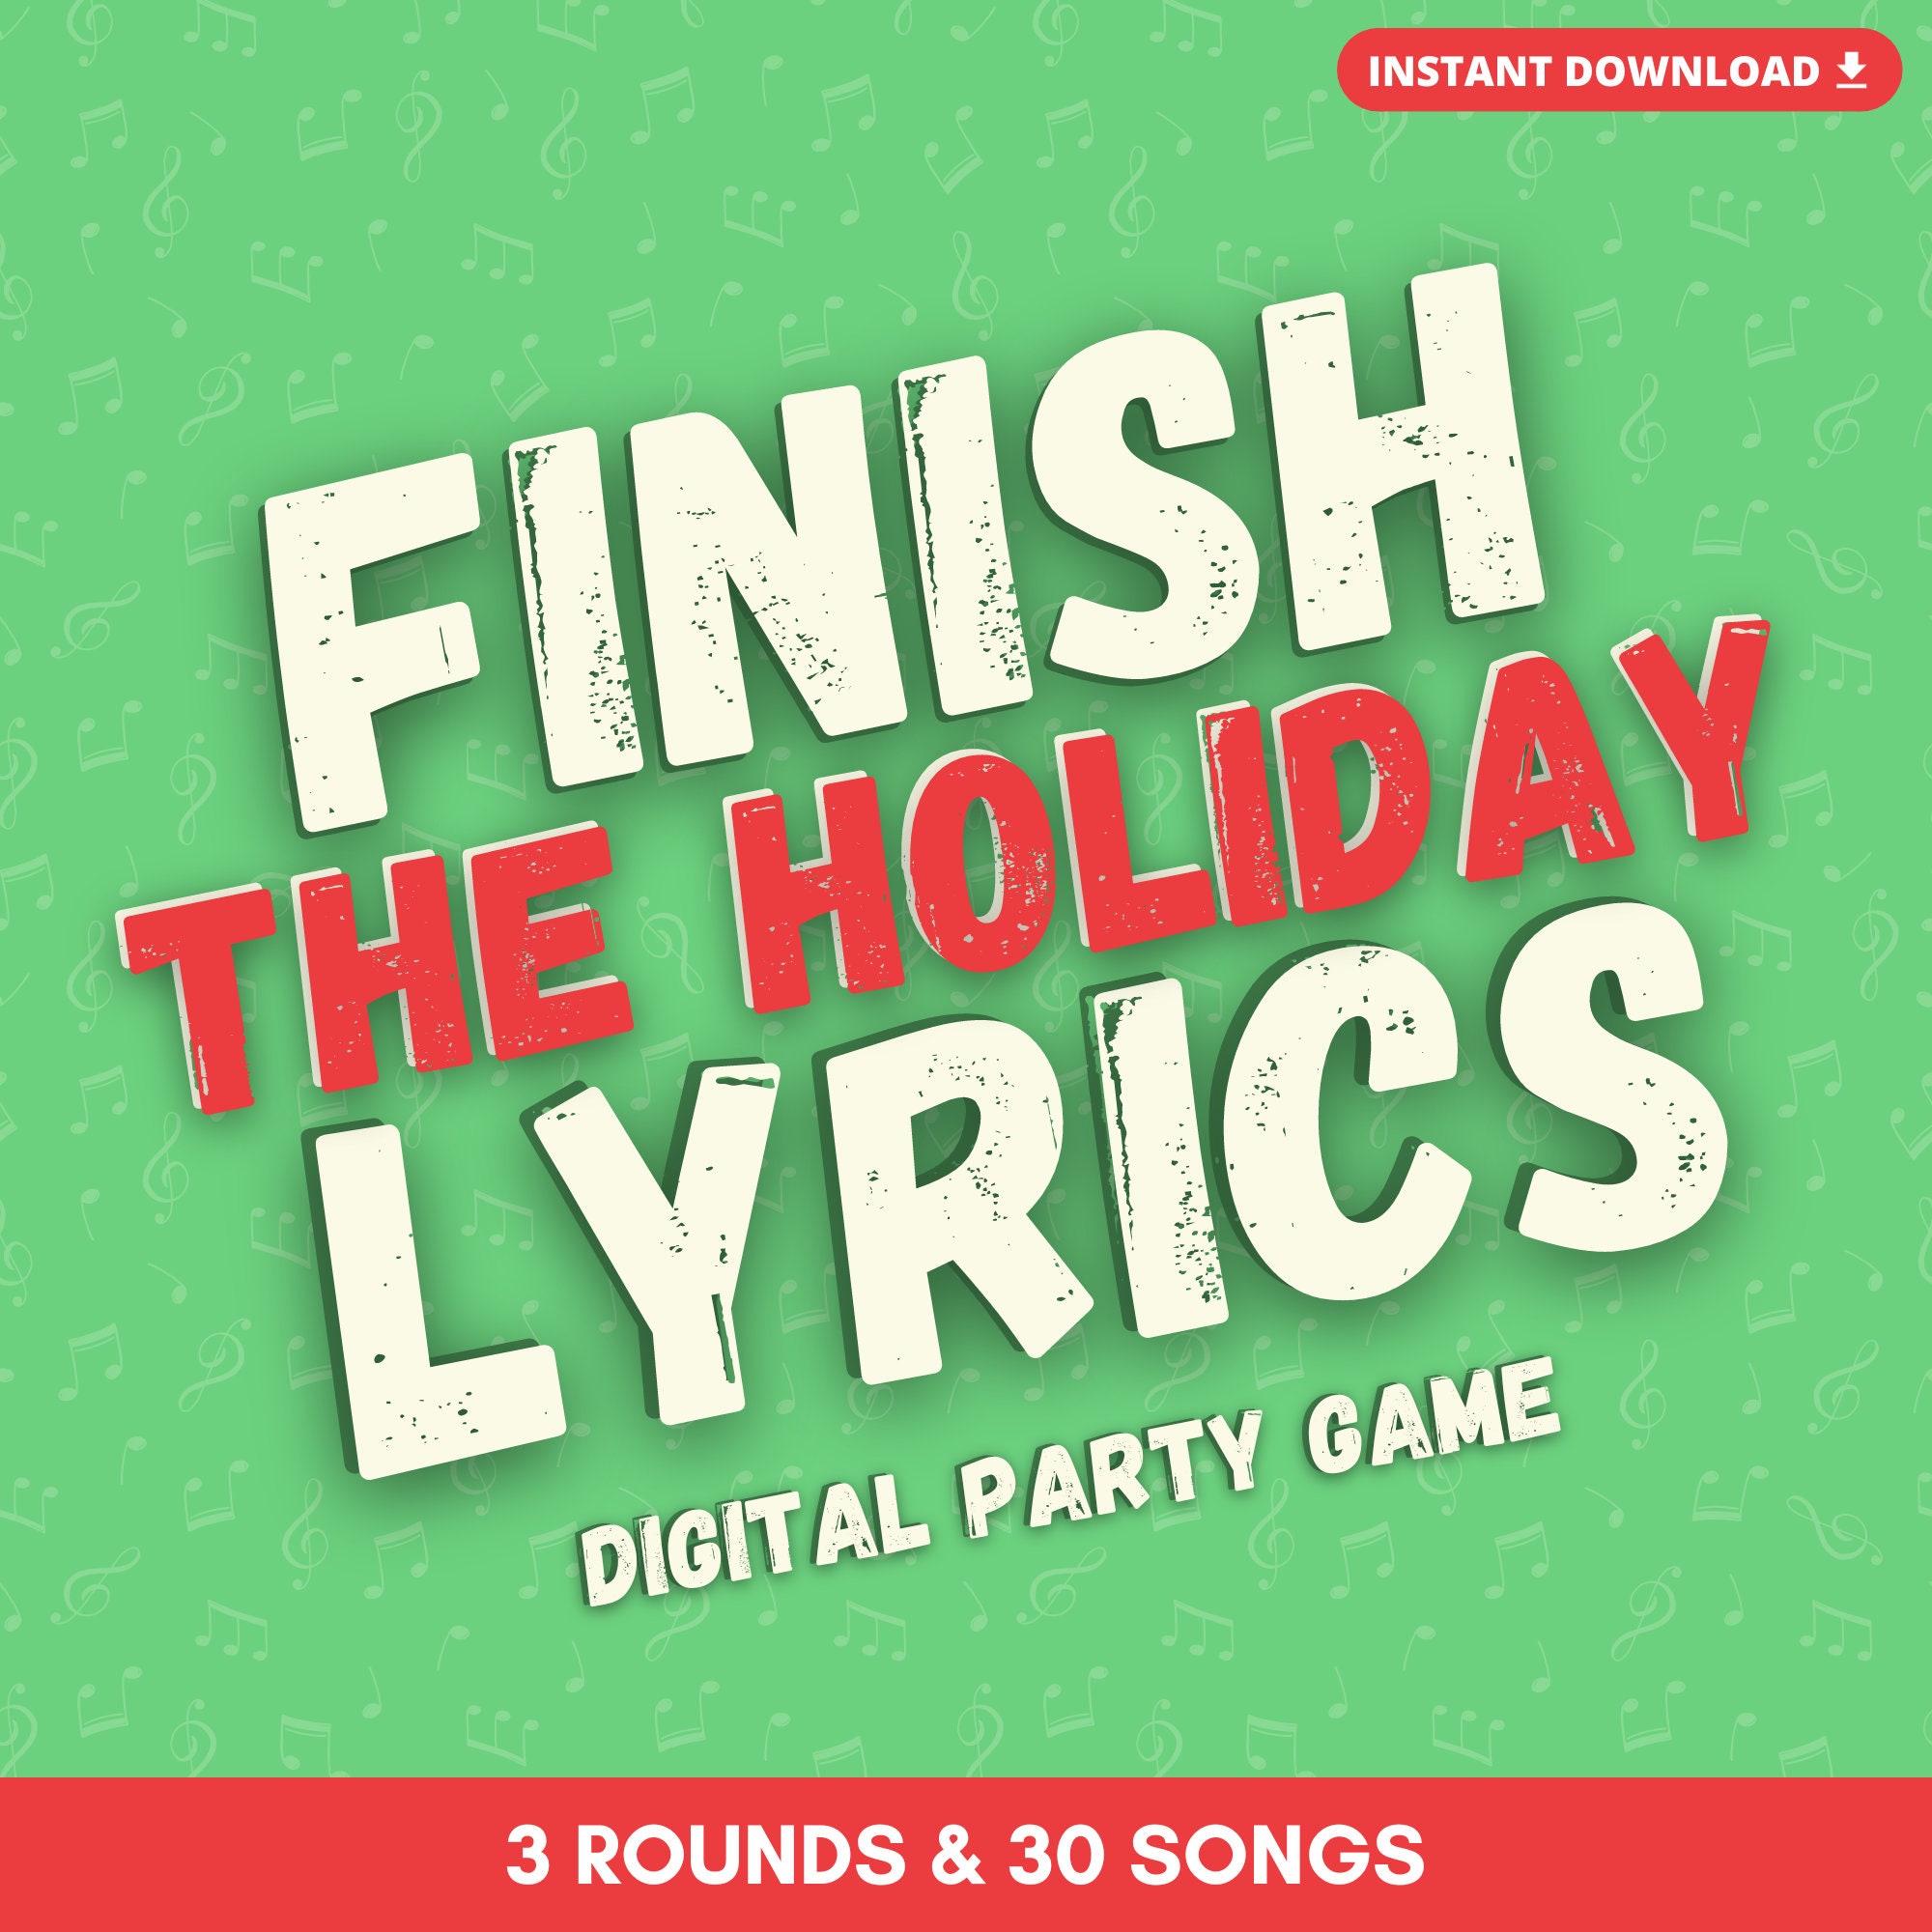 Christmas Carols. Holidays. Songs. Lyrics. Games. Quiz. - Payhip